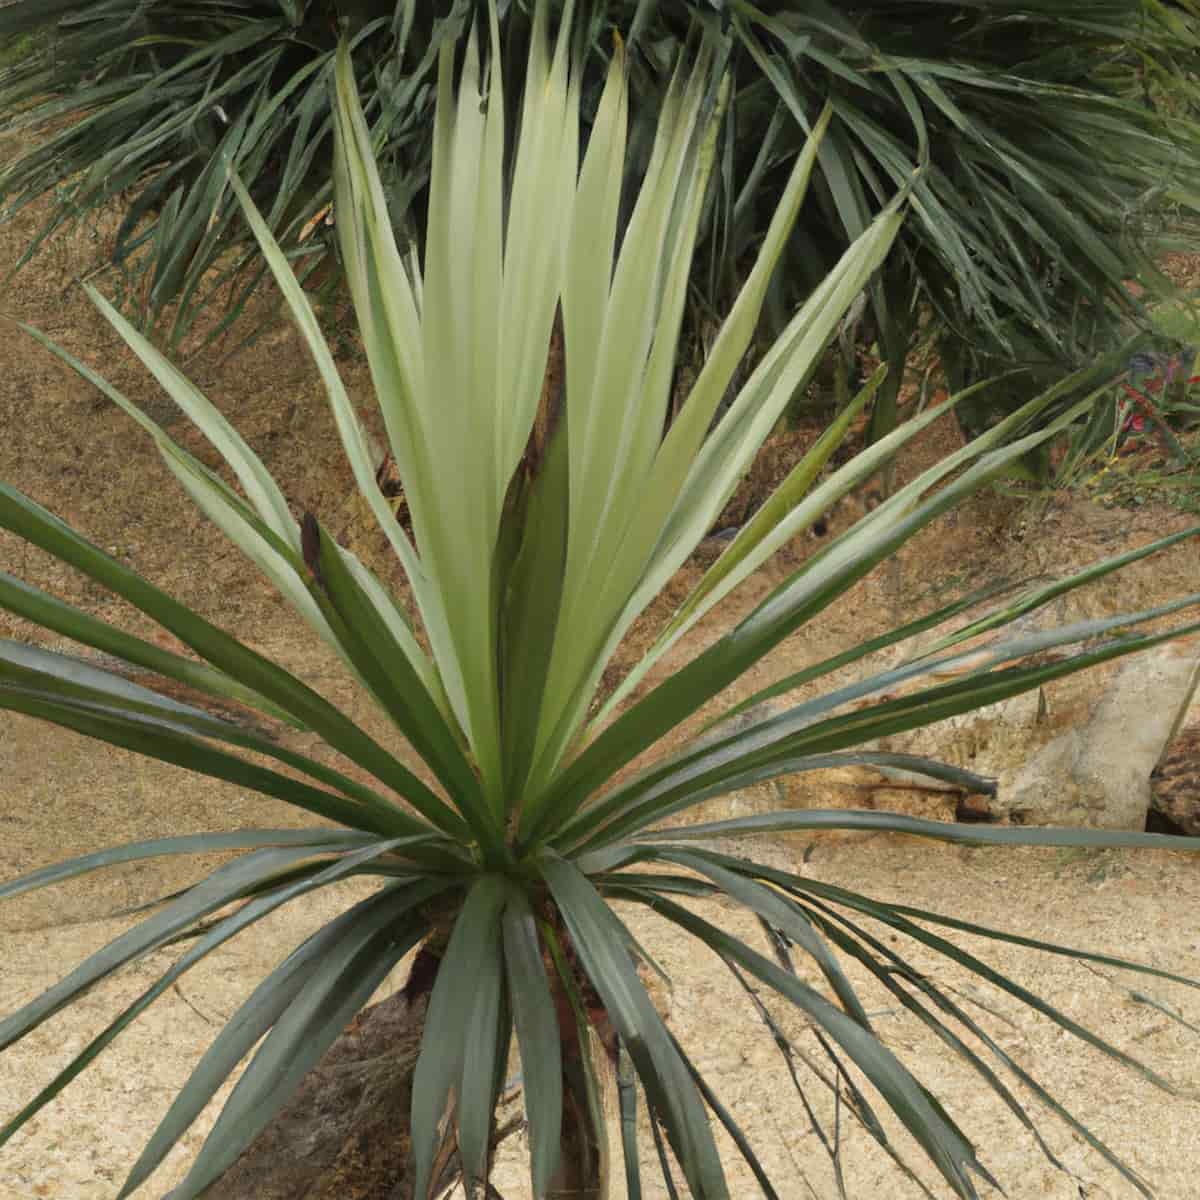 Yucca Shidigera